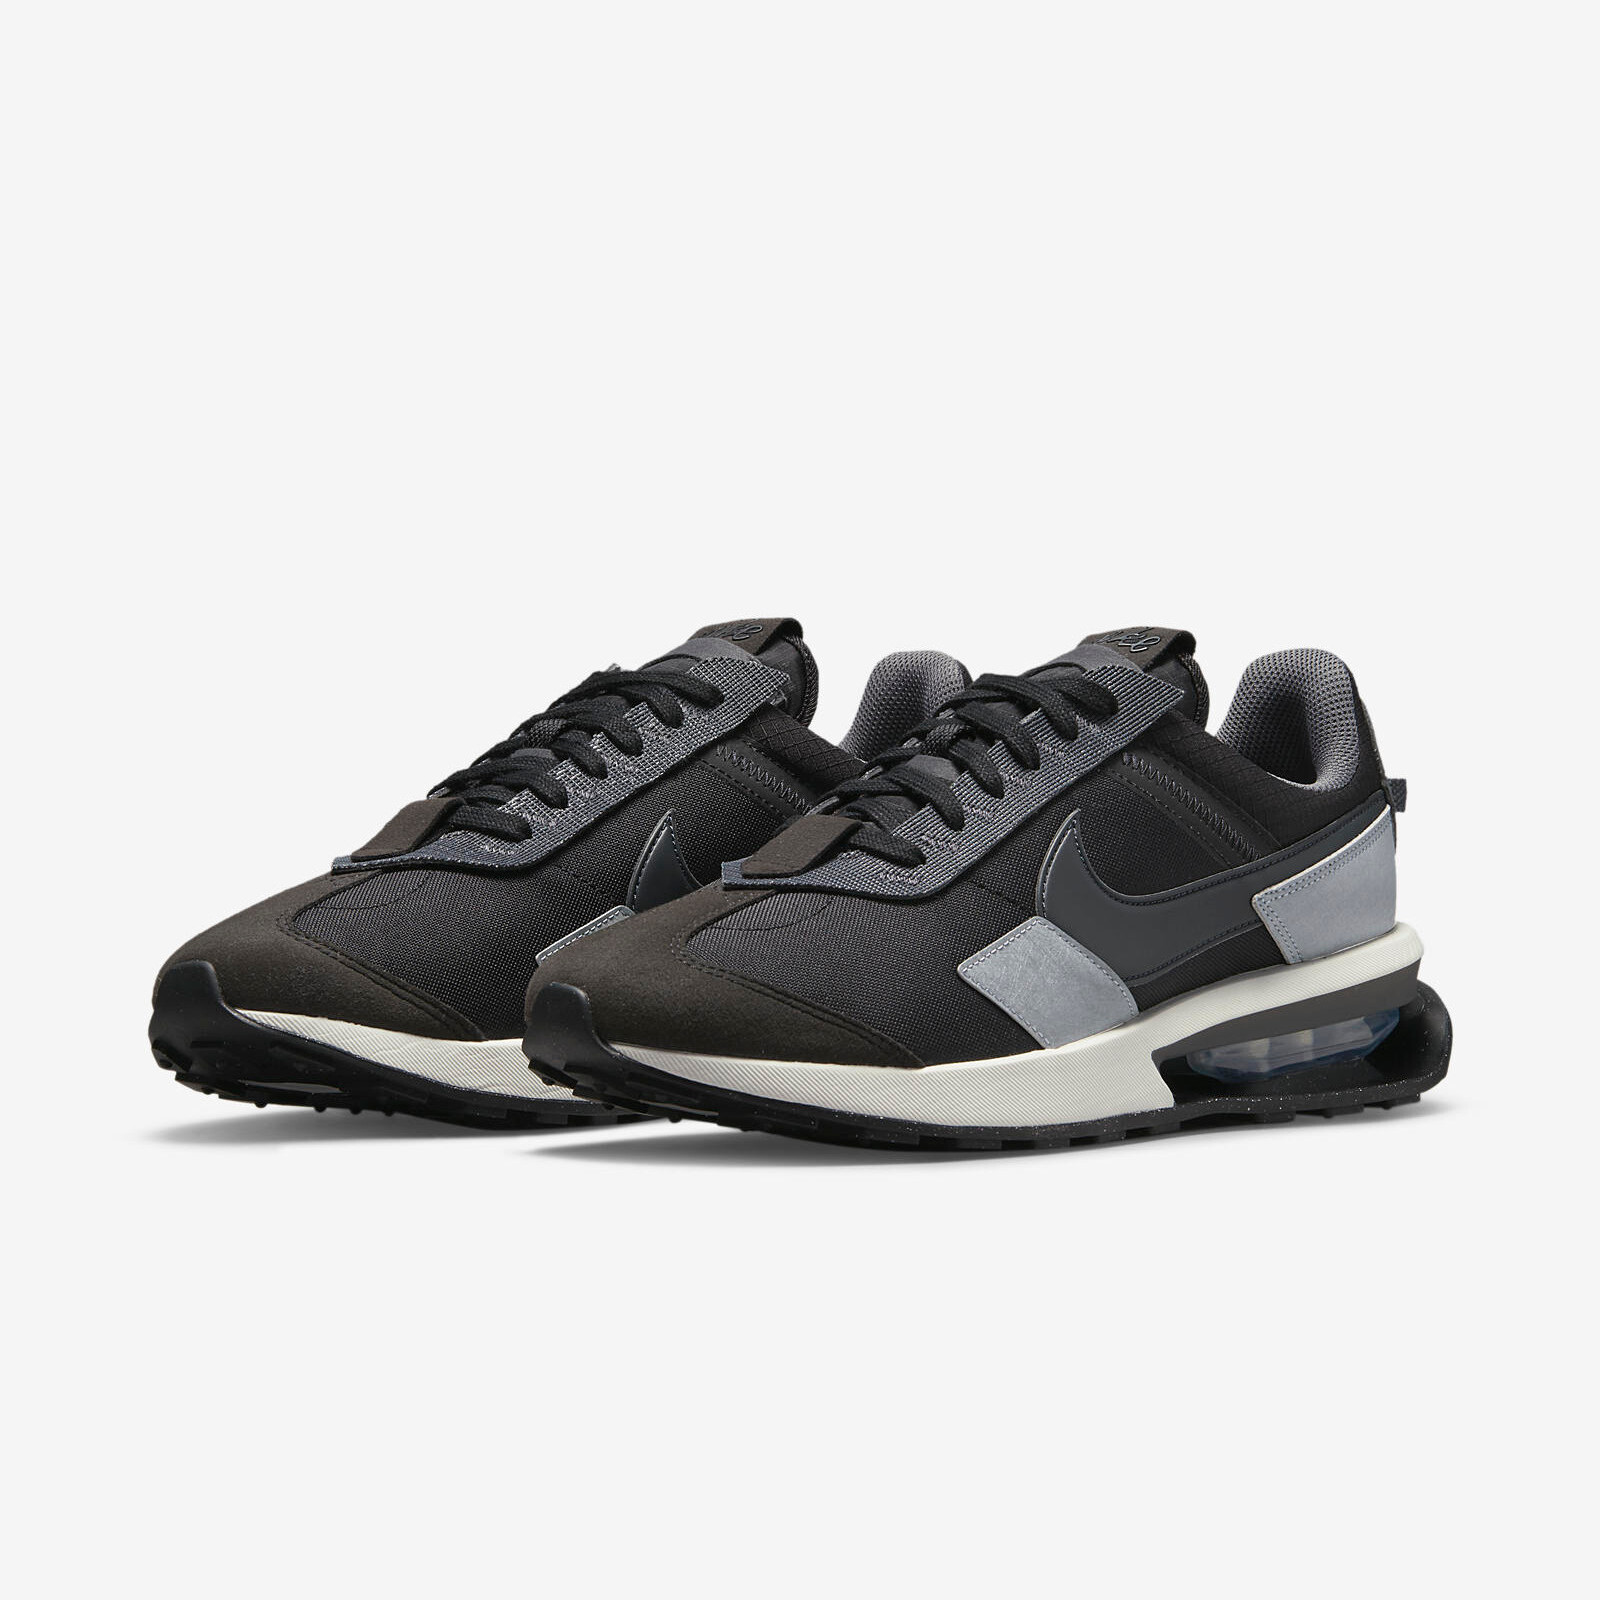 Nike Air Max Pre-Day
Black / Grey